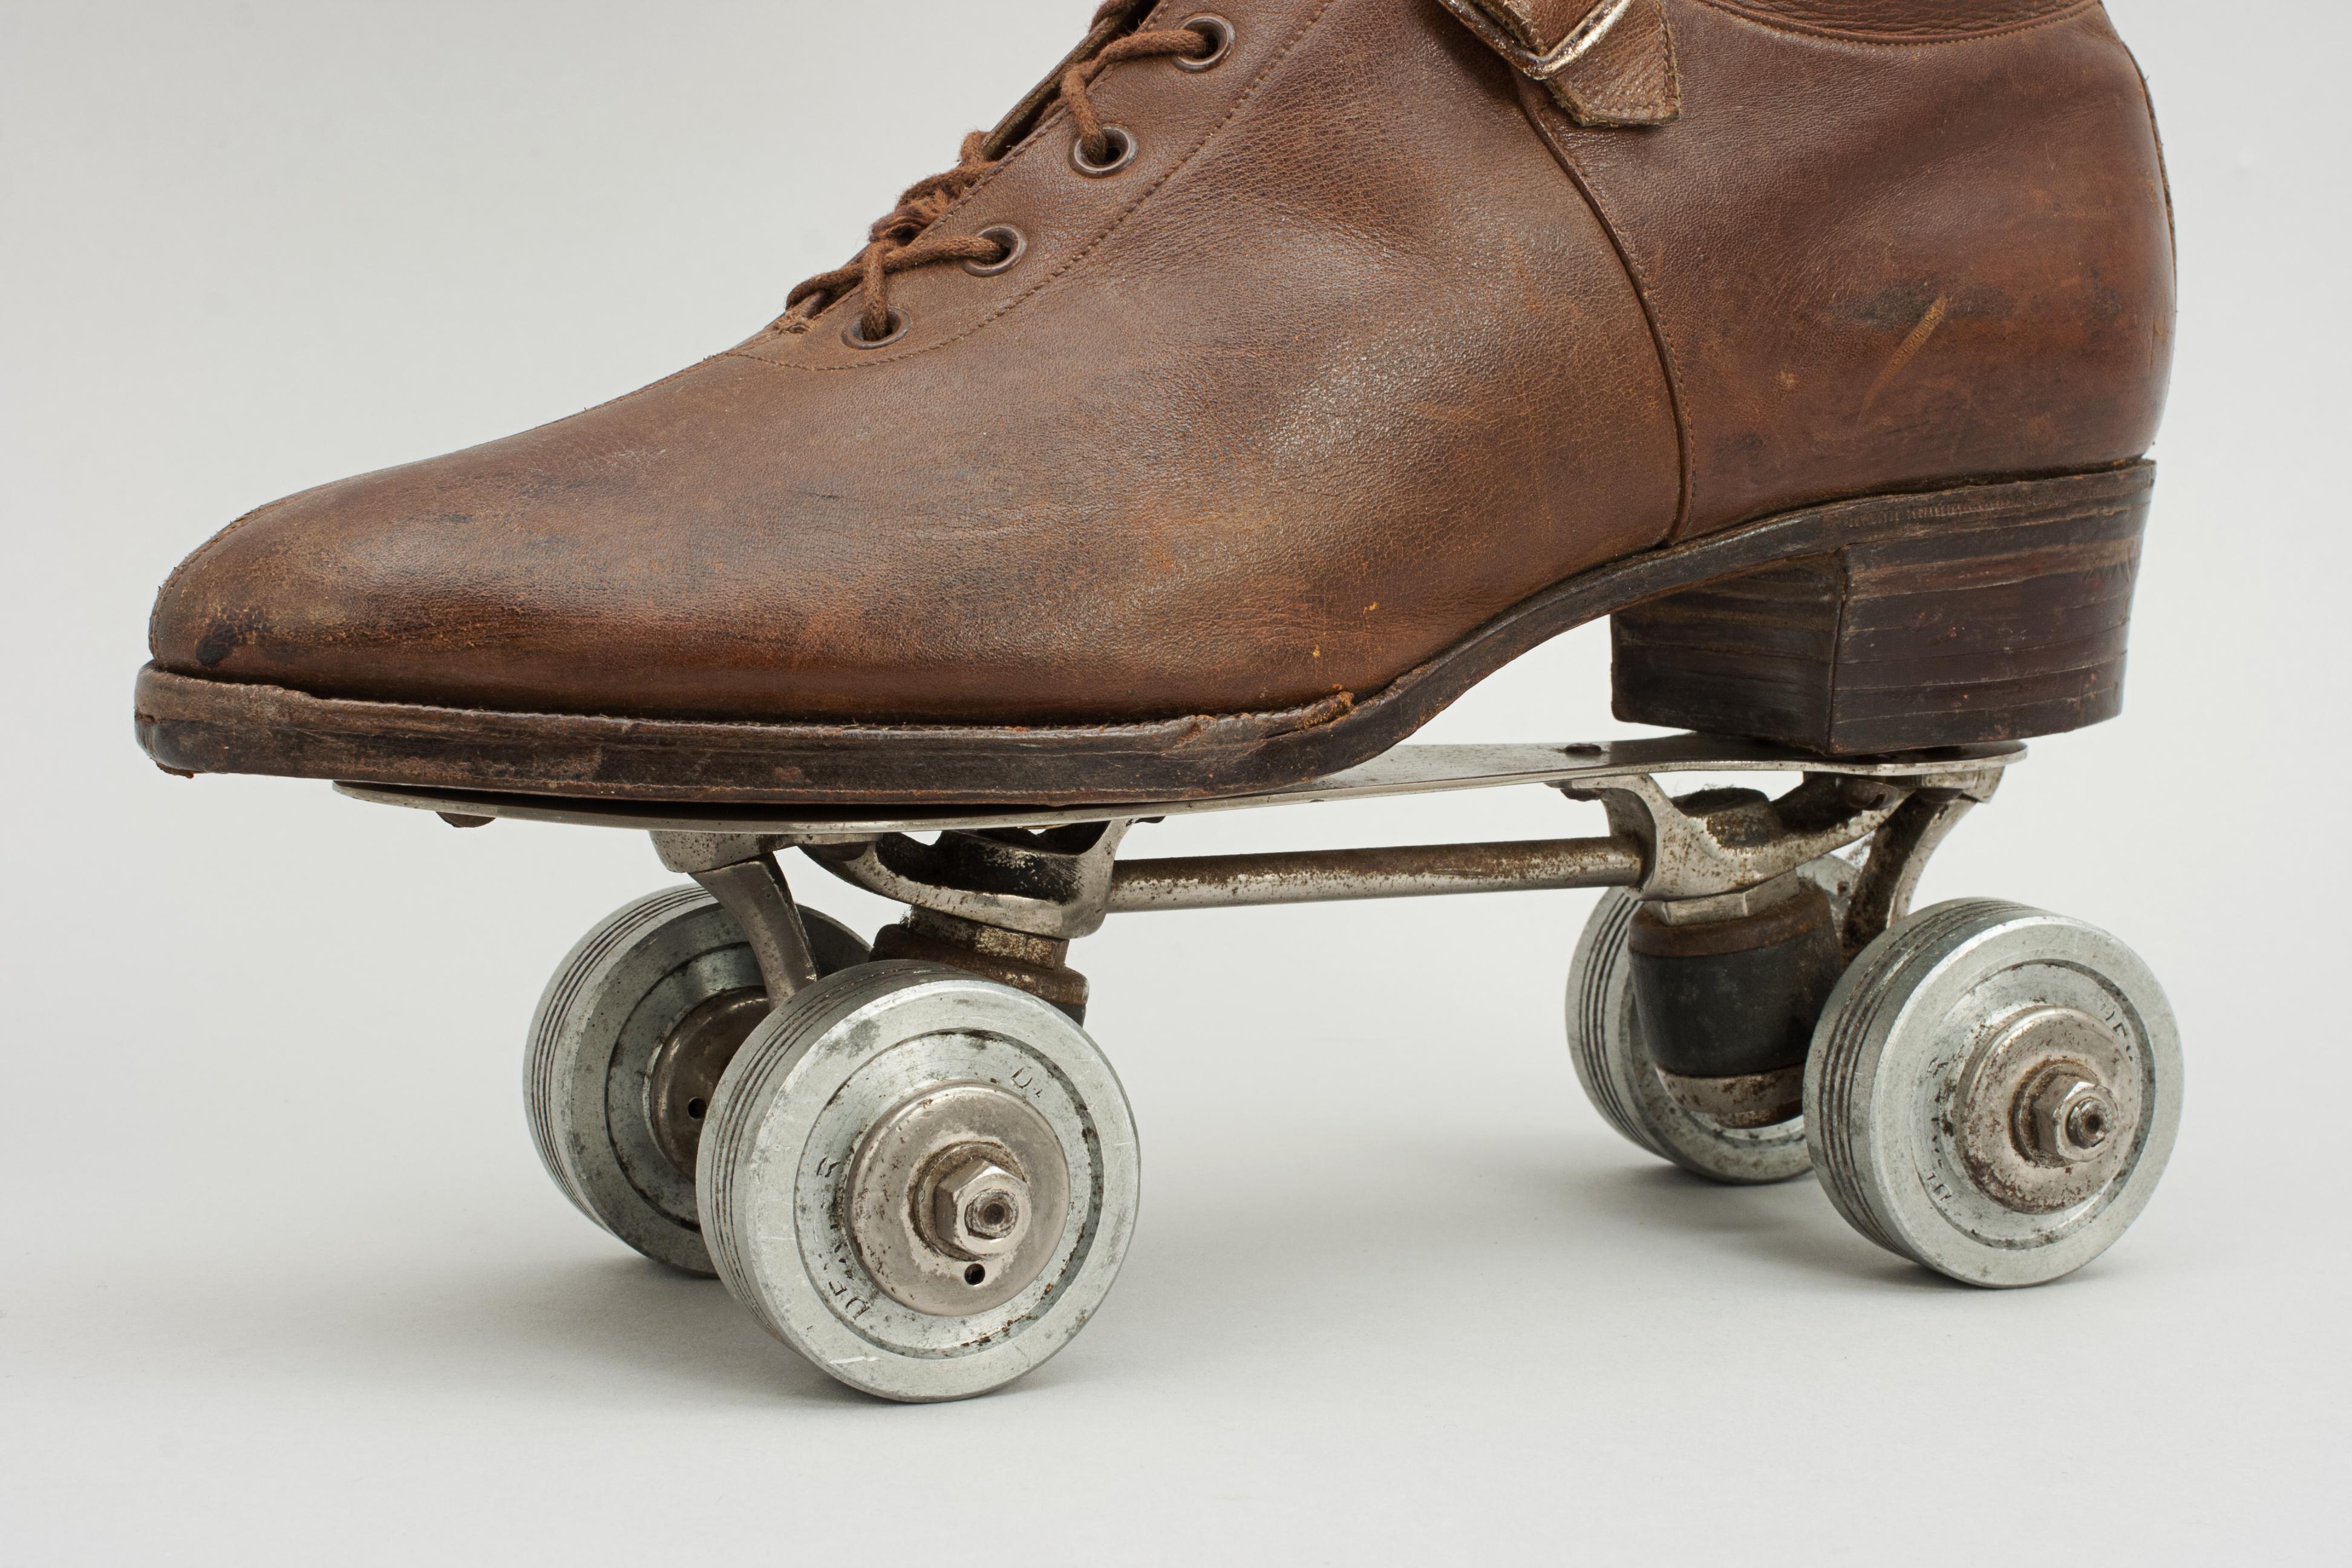 roller skates with metal wheels